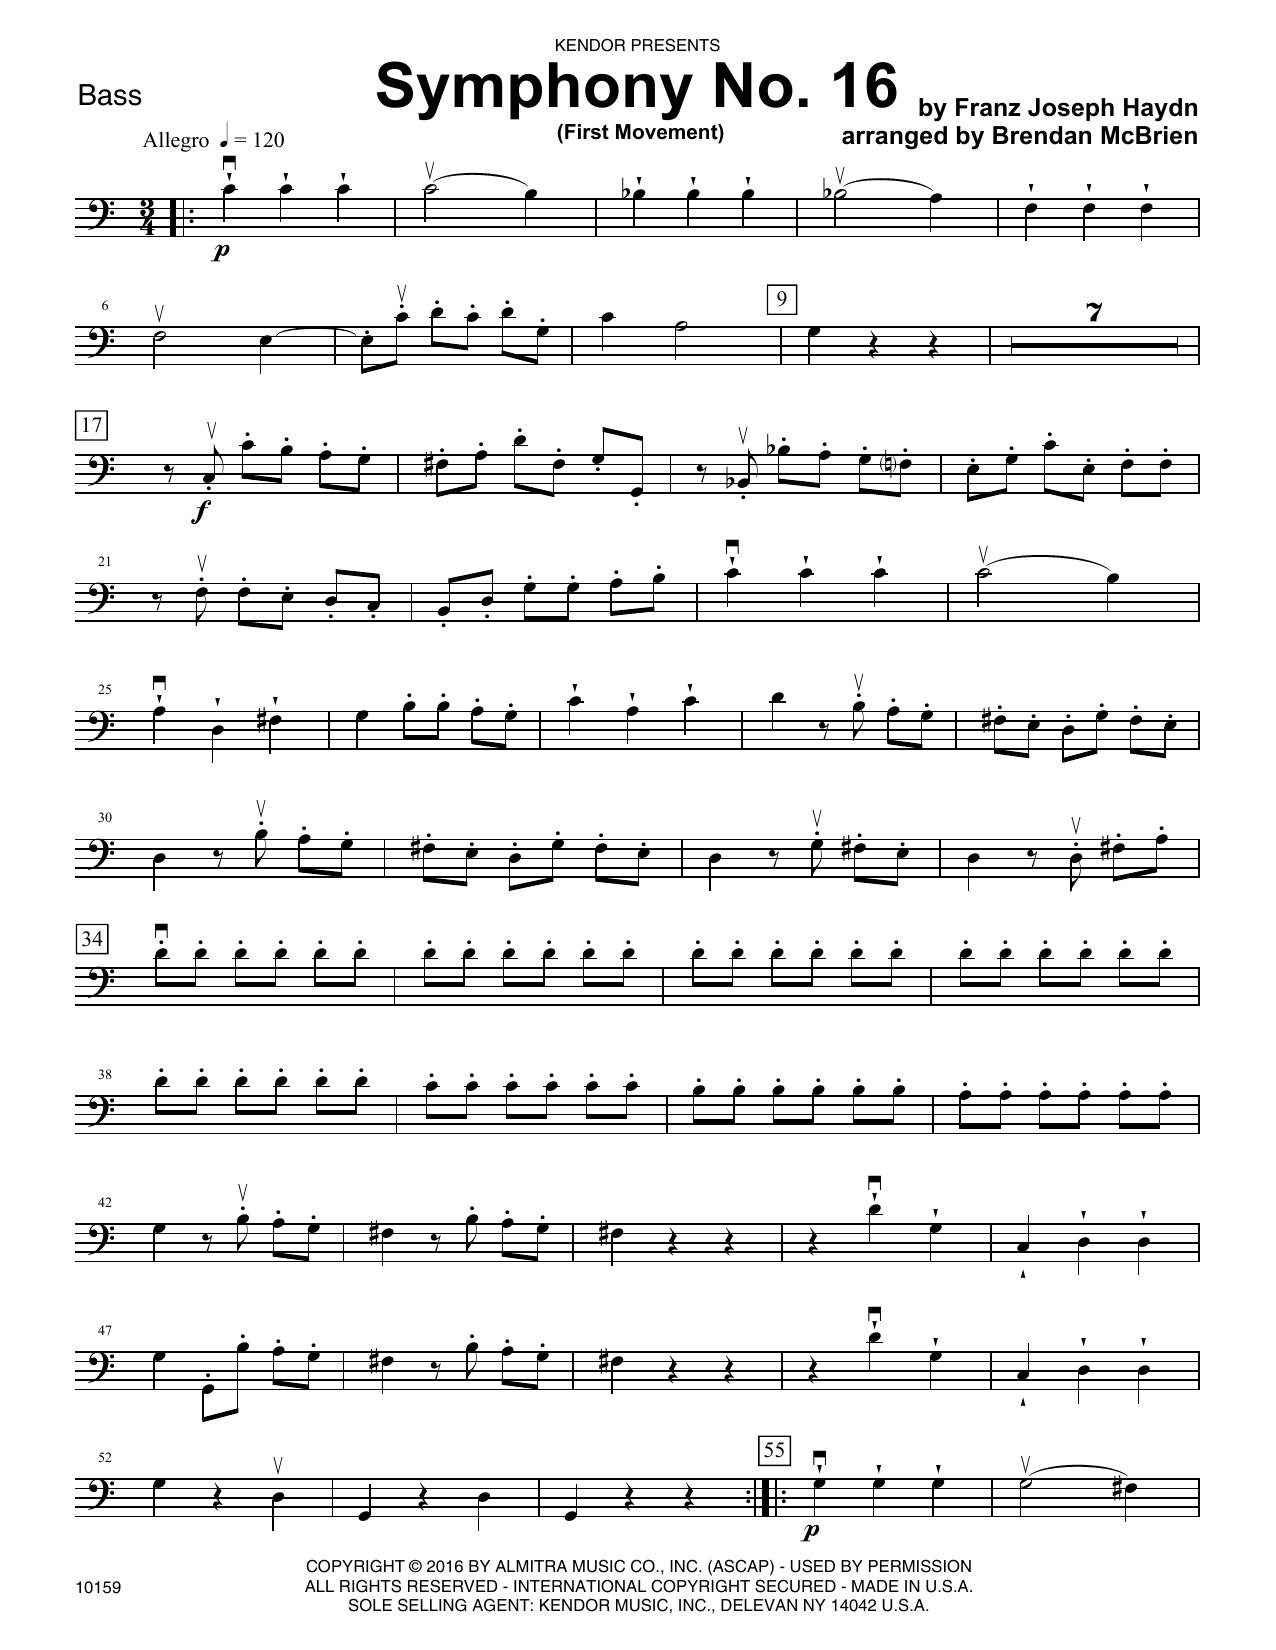 Download Brian McBrien Symphony No. 16 (First Movement) - Bass Sheet Music